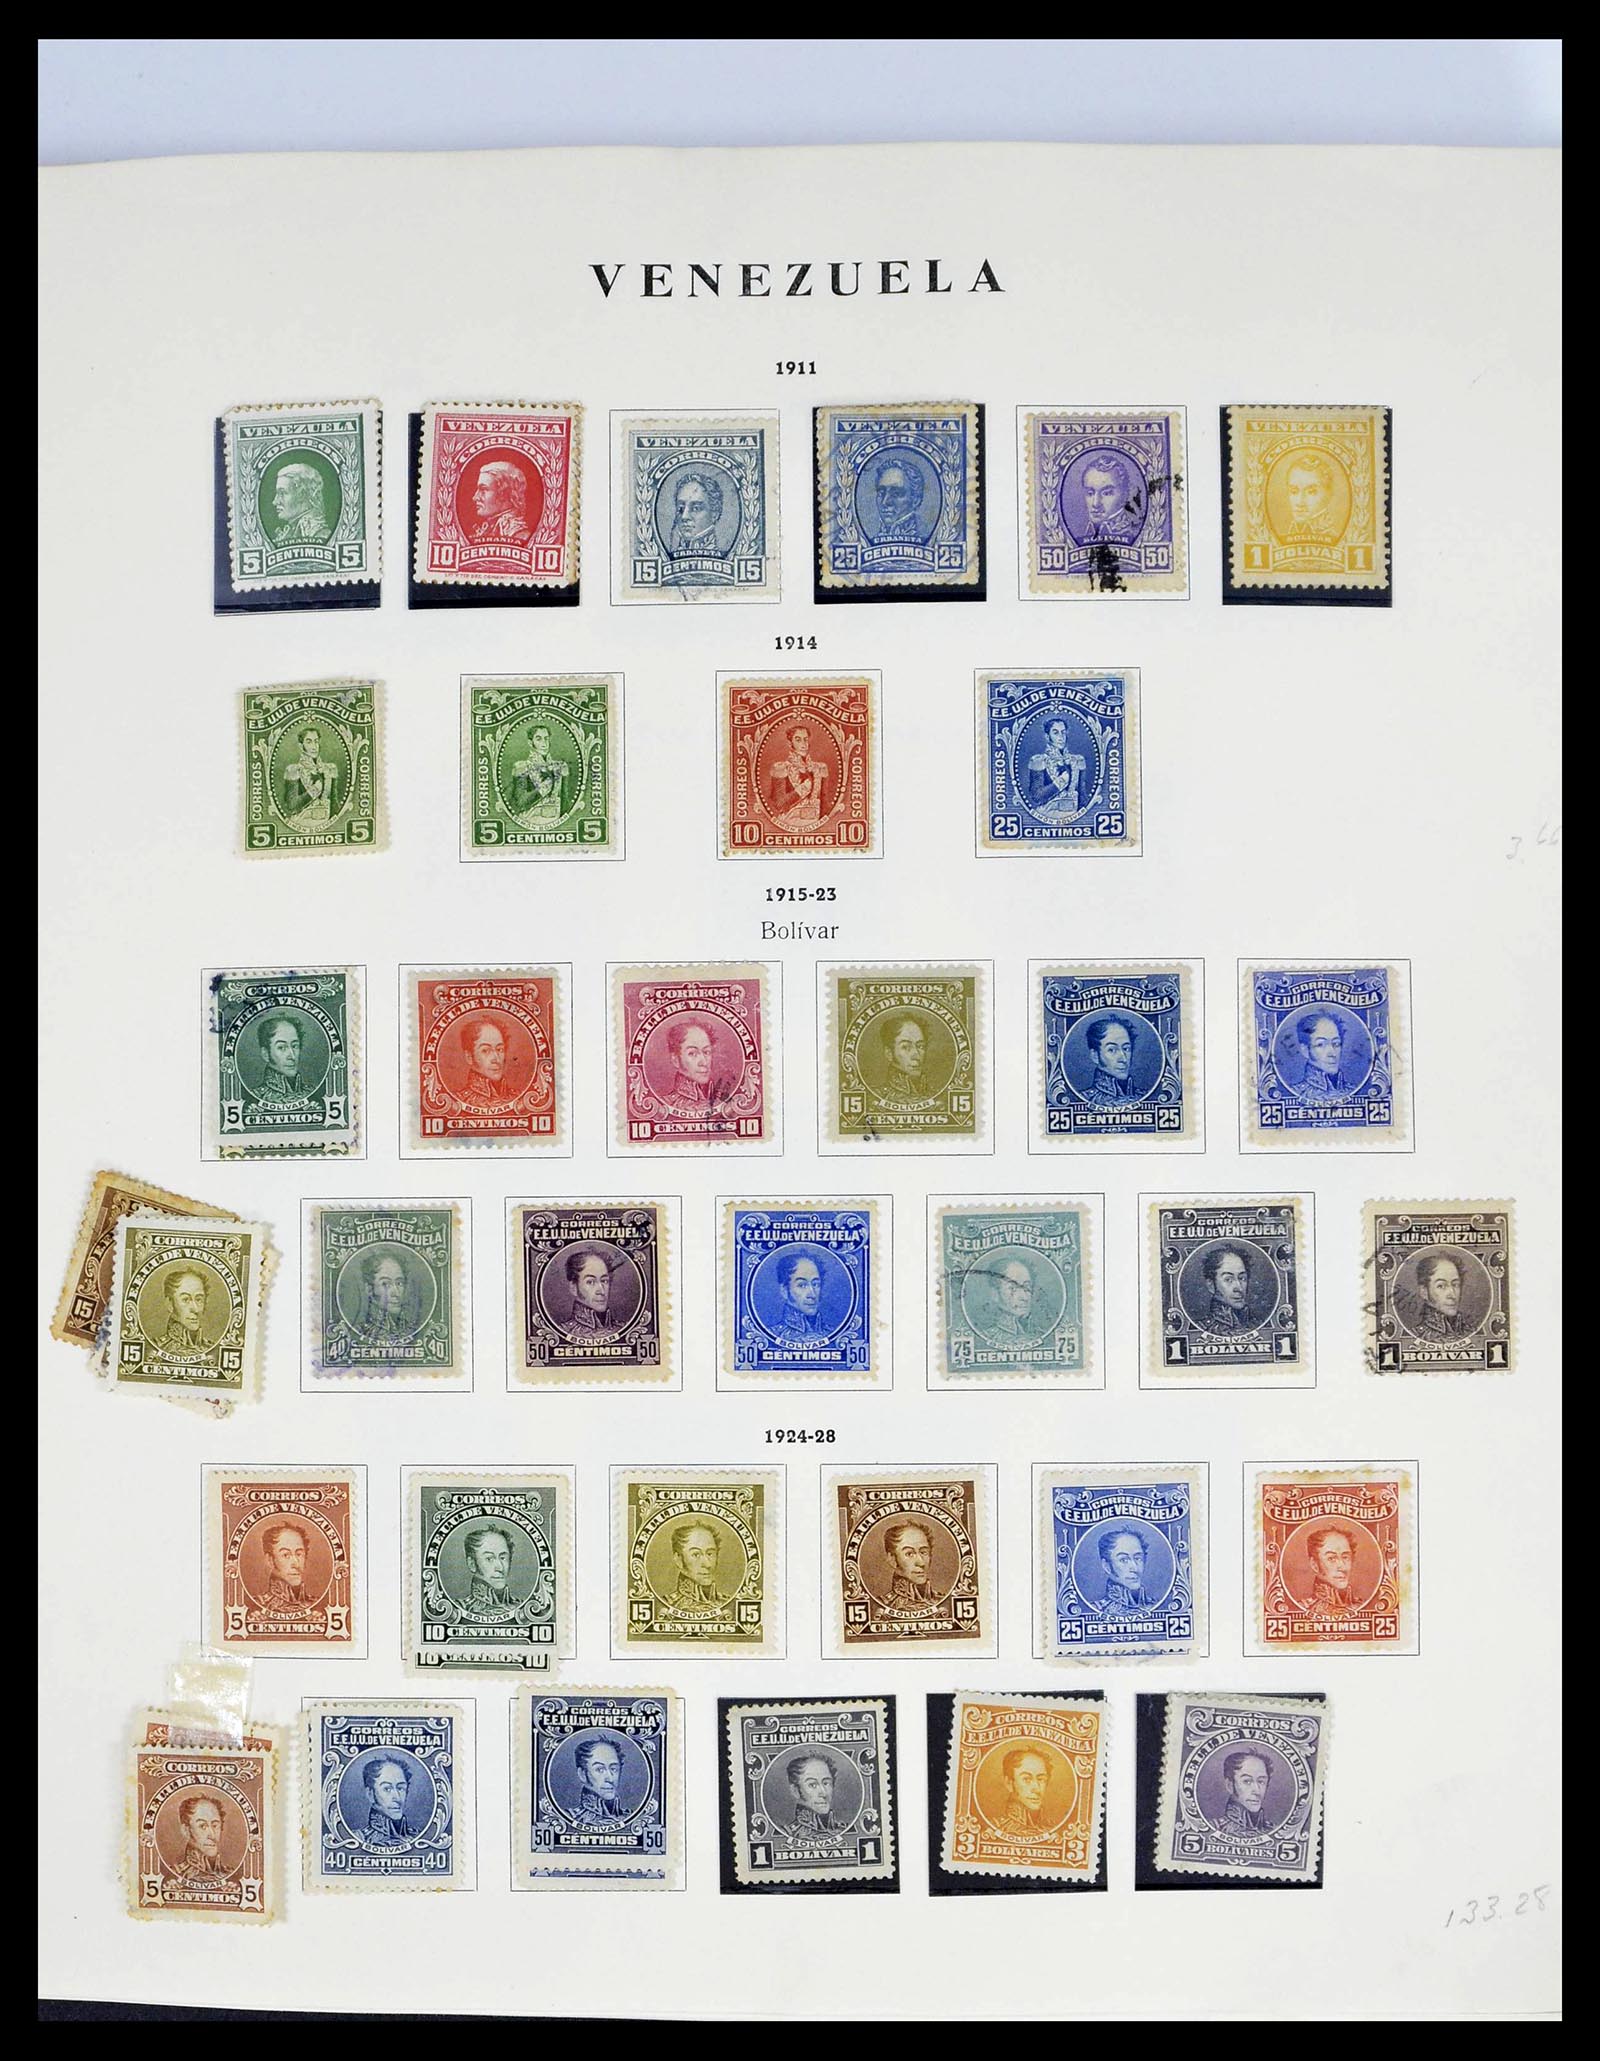 39223 0010 - Stamp collection 39223 Venezuela 1859-1984.